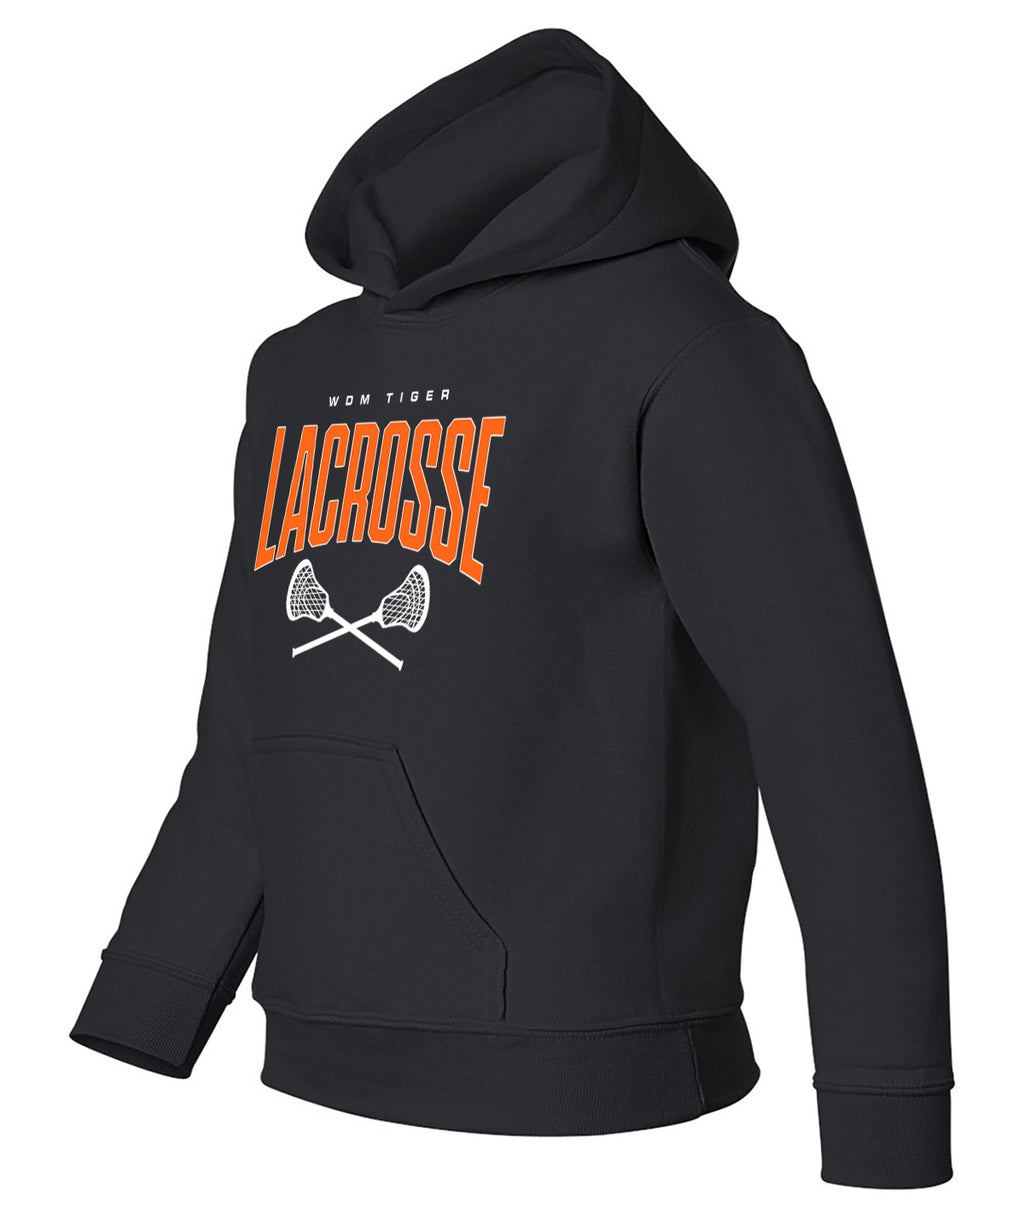 WDM Tiger Lacrosse Youth Hooded Sweatshirt